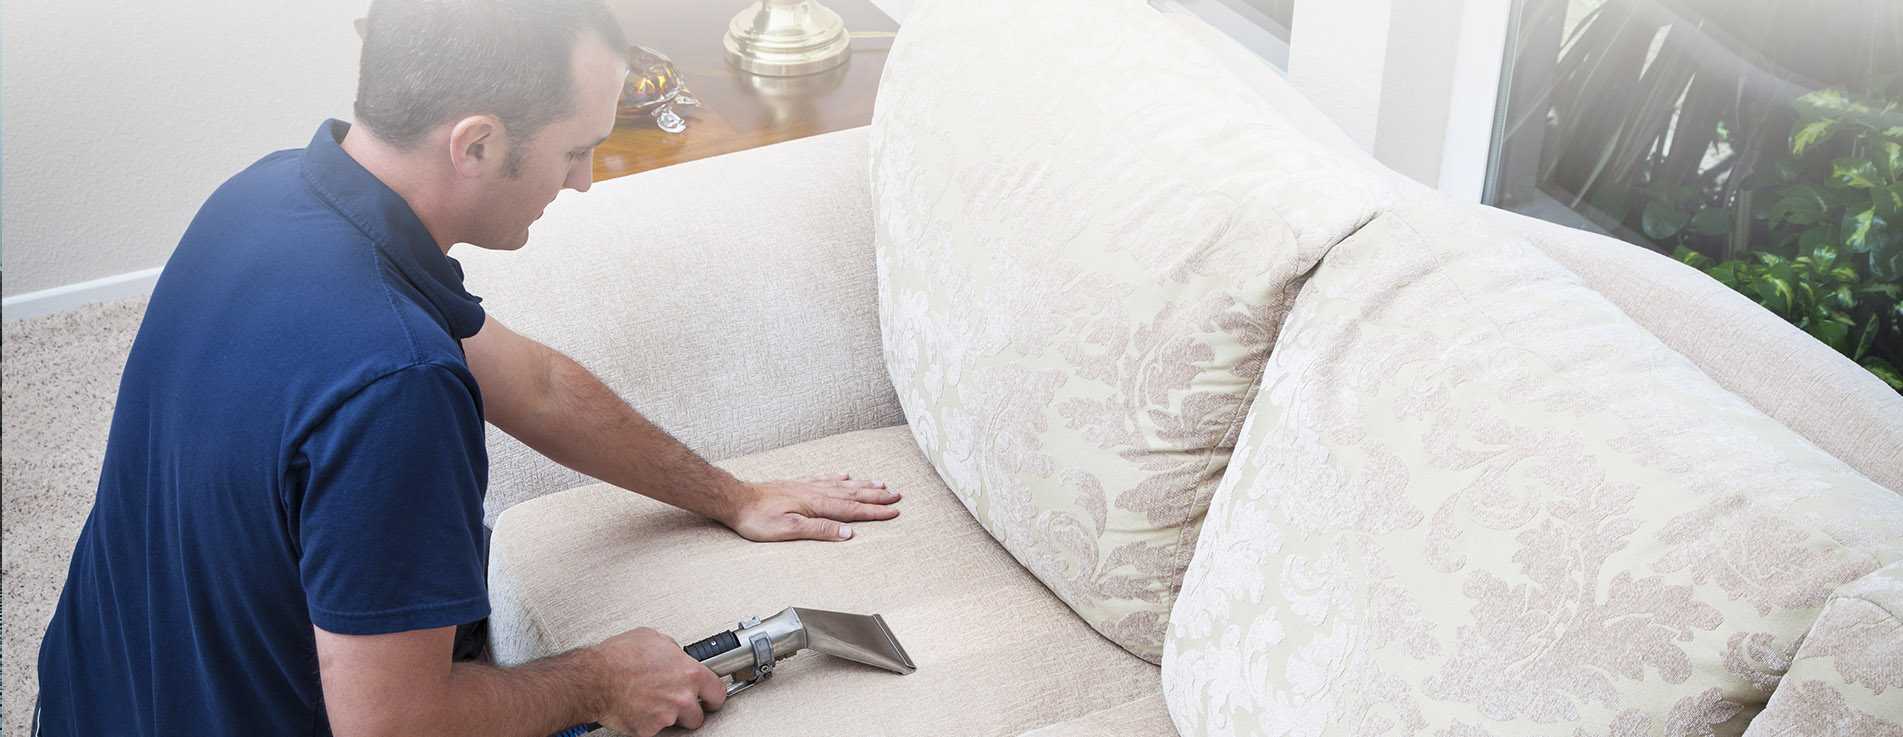  химчистка дивана на дому своими руками - фото